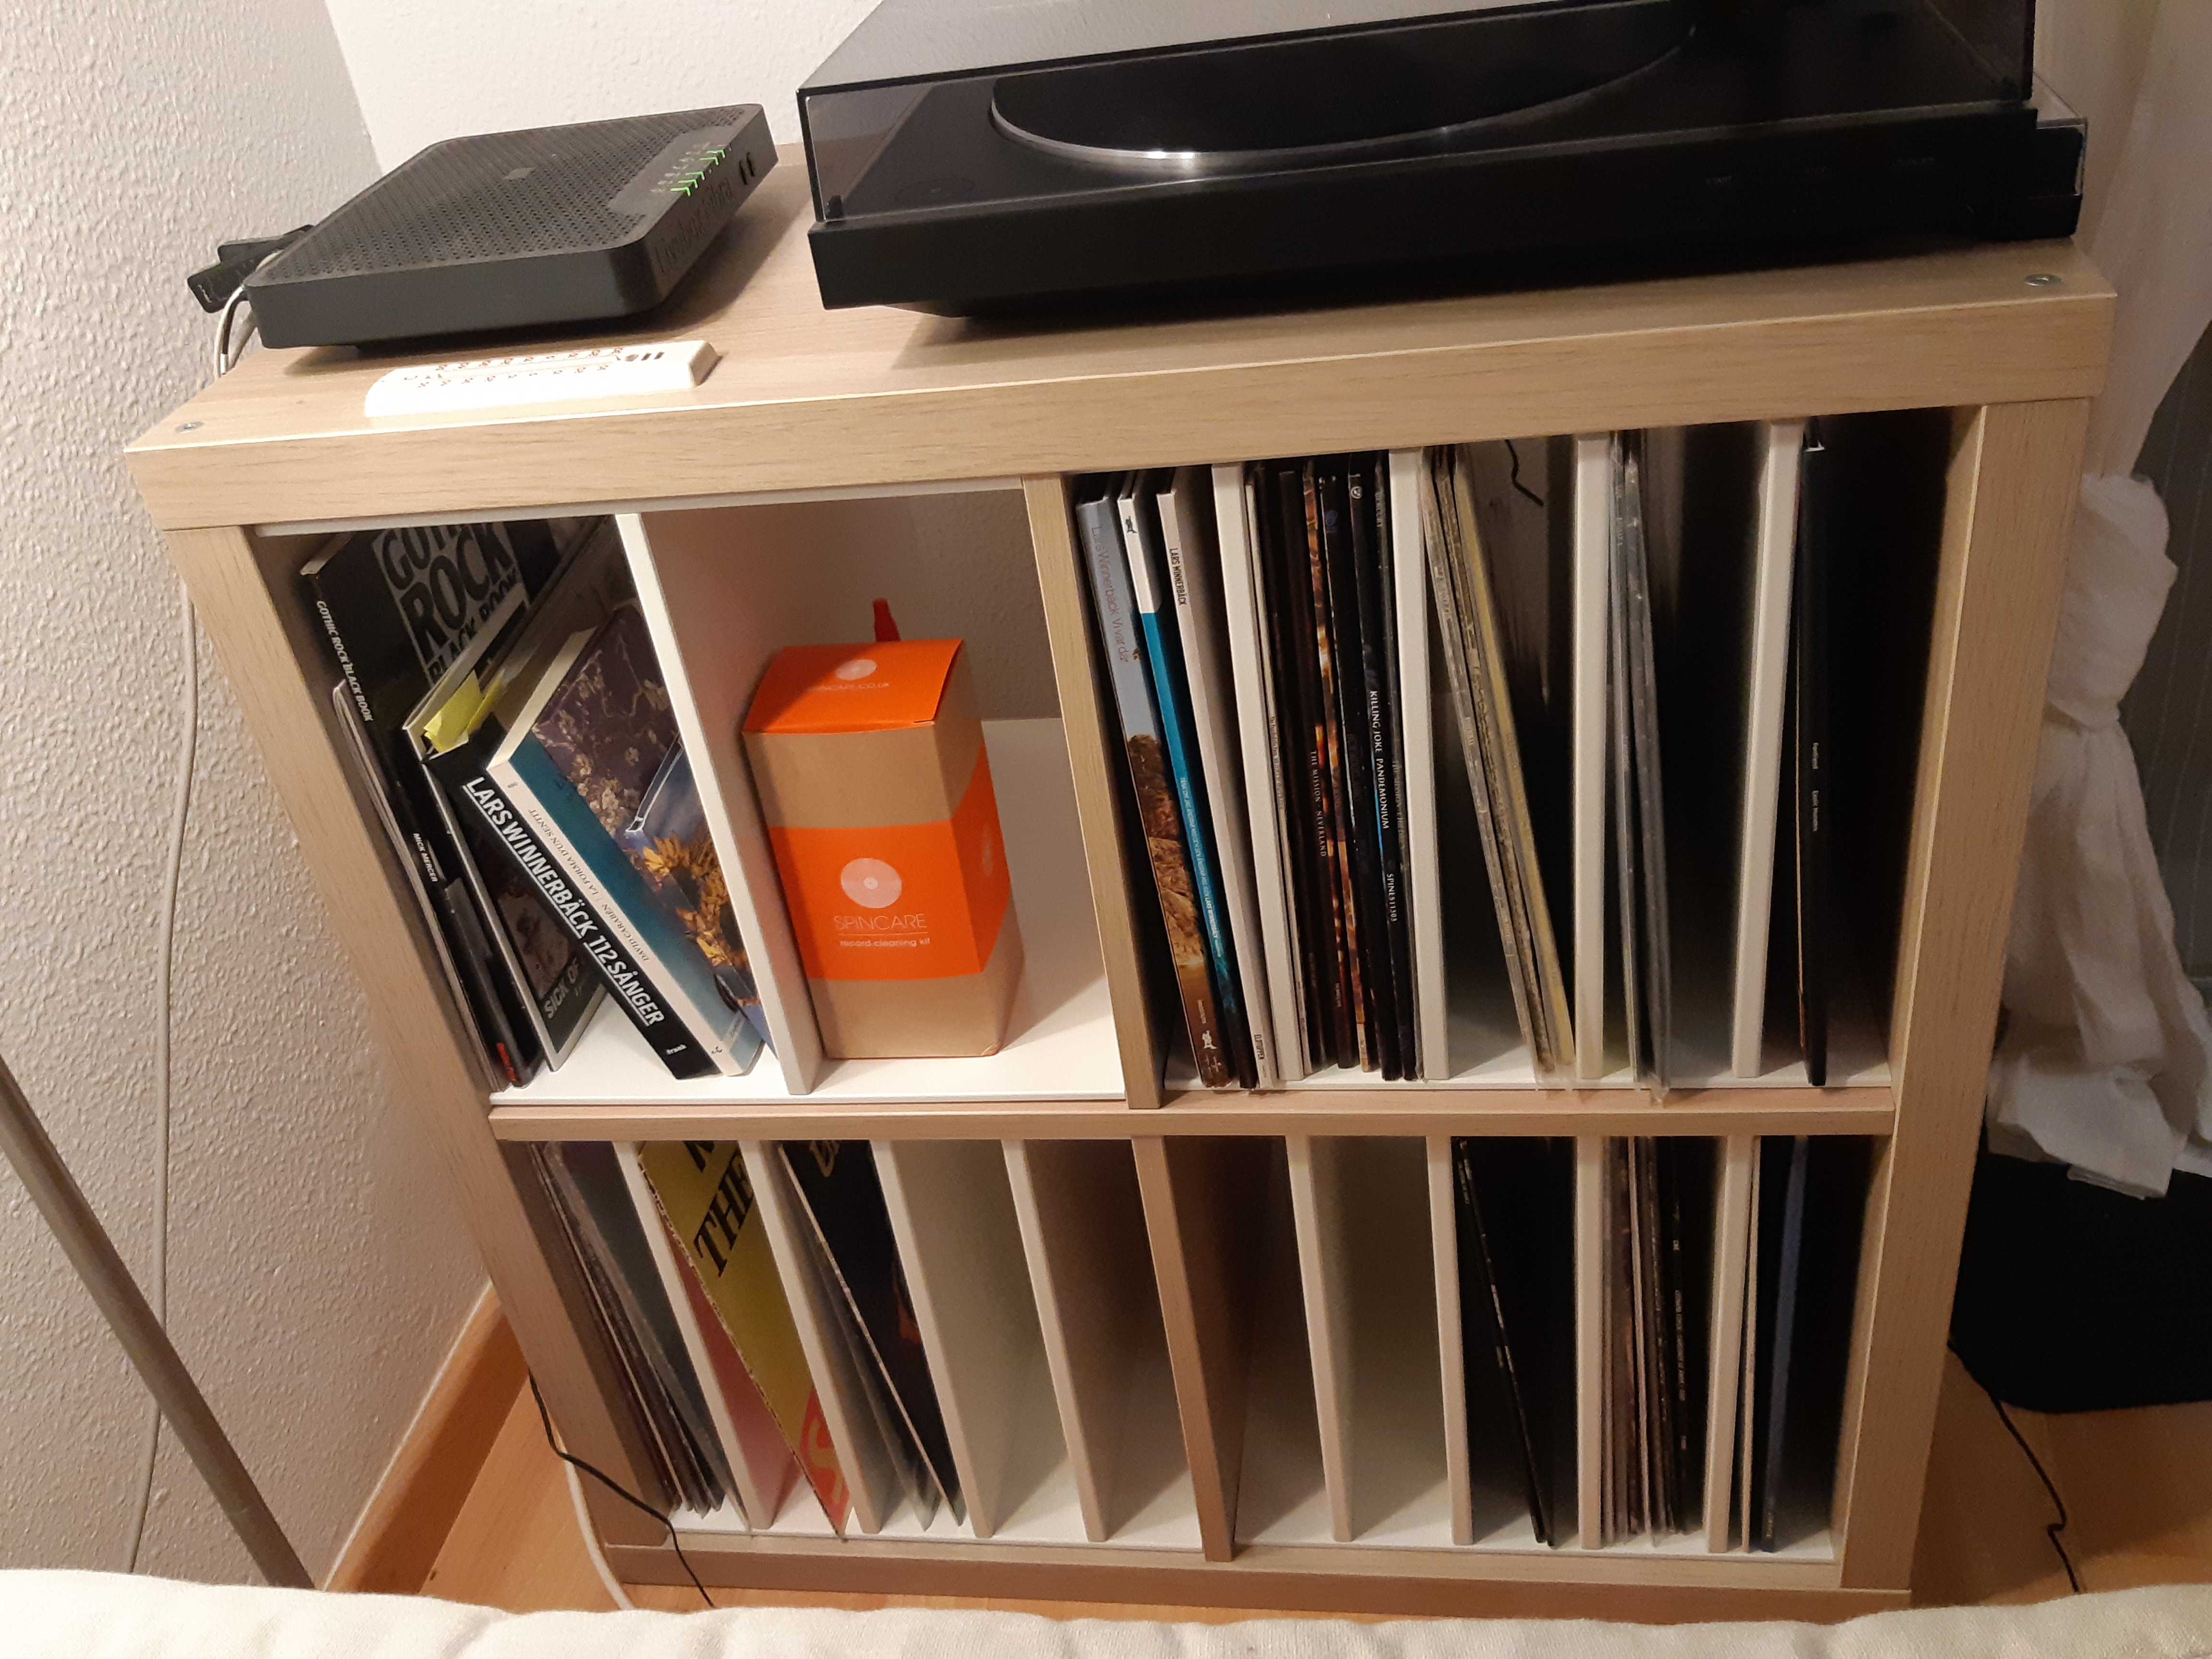 Vinyl player and Kallax storage shelf